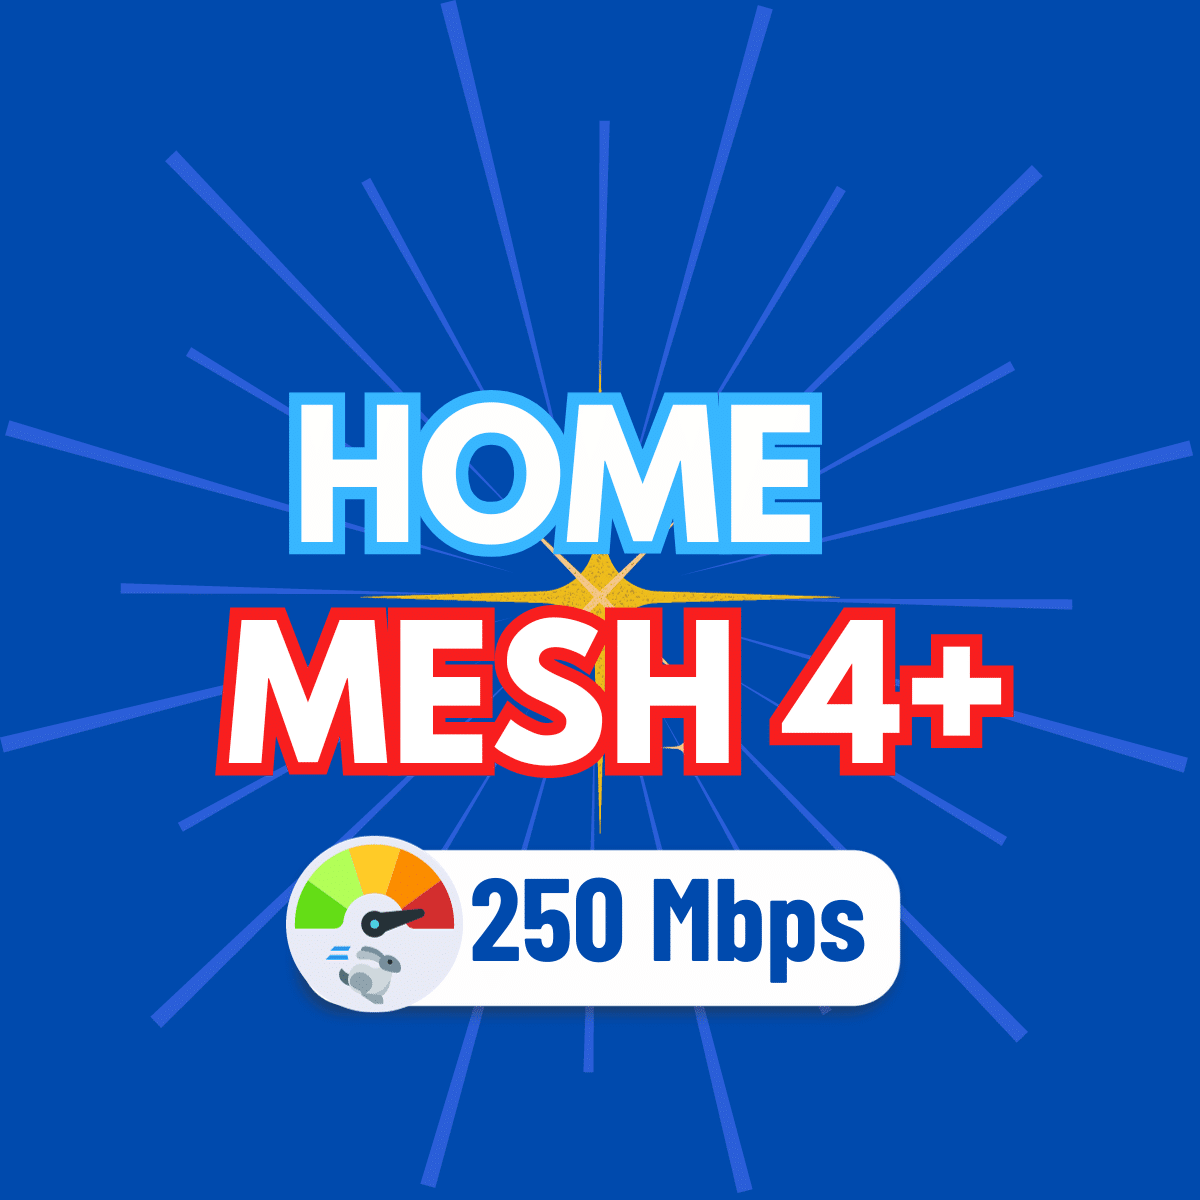 Home Mesh 4 Plus, home mesh 4+